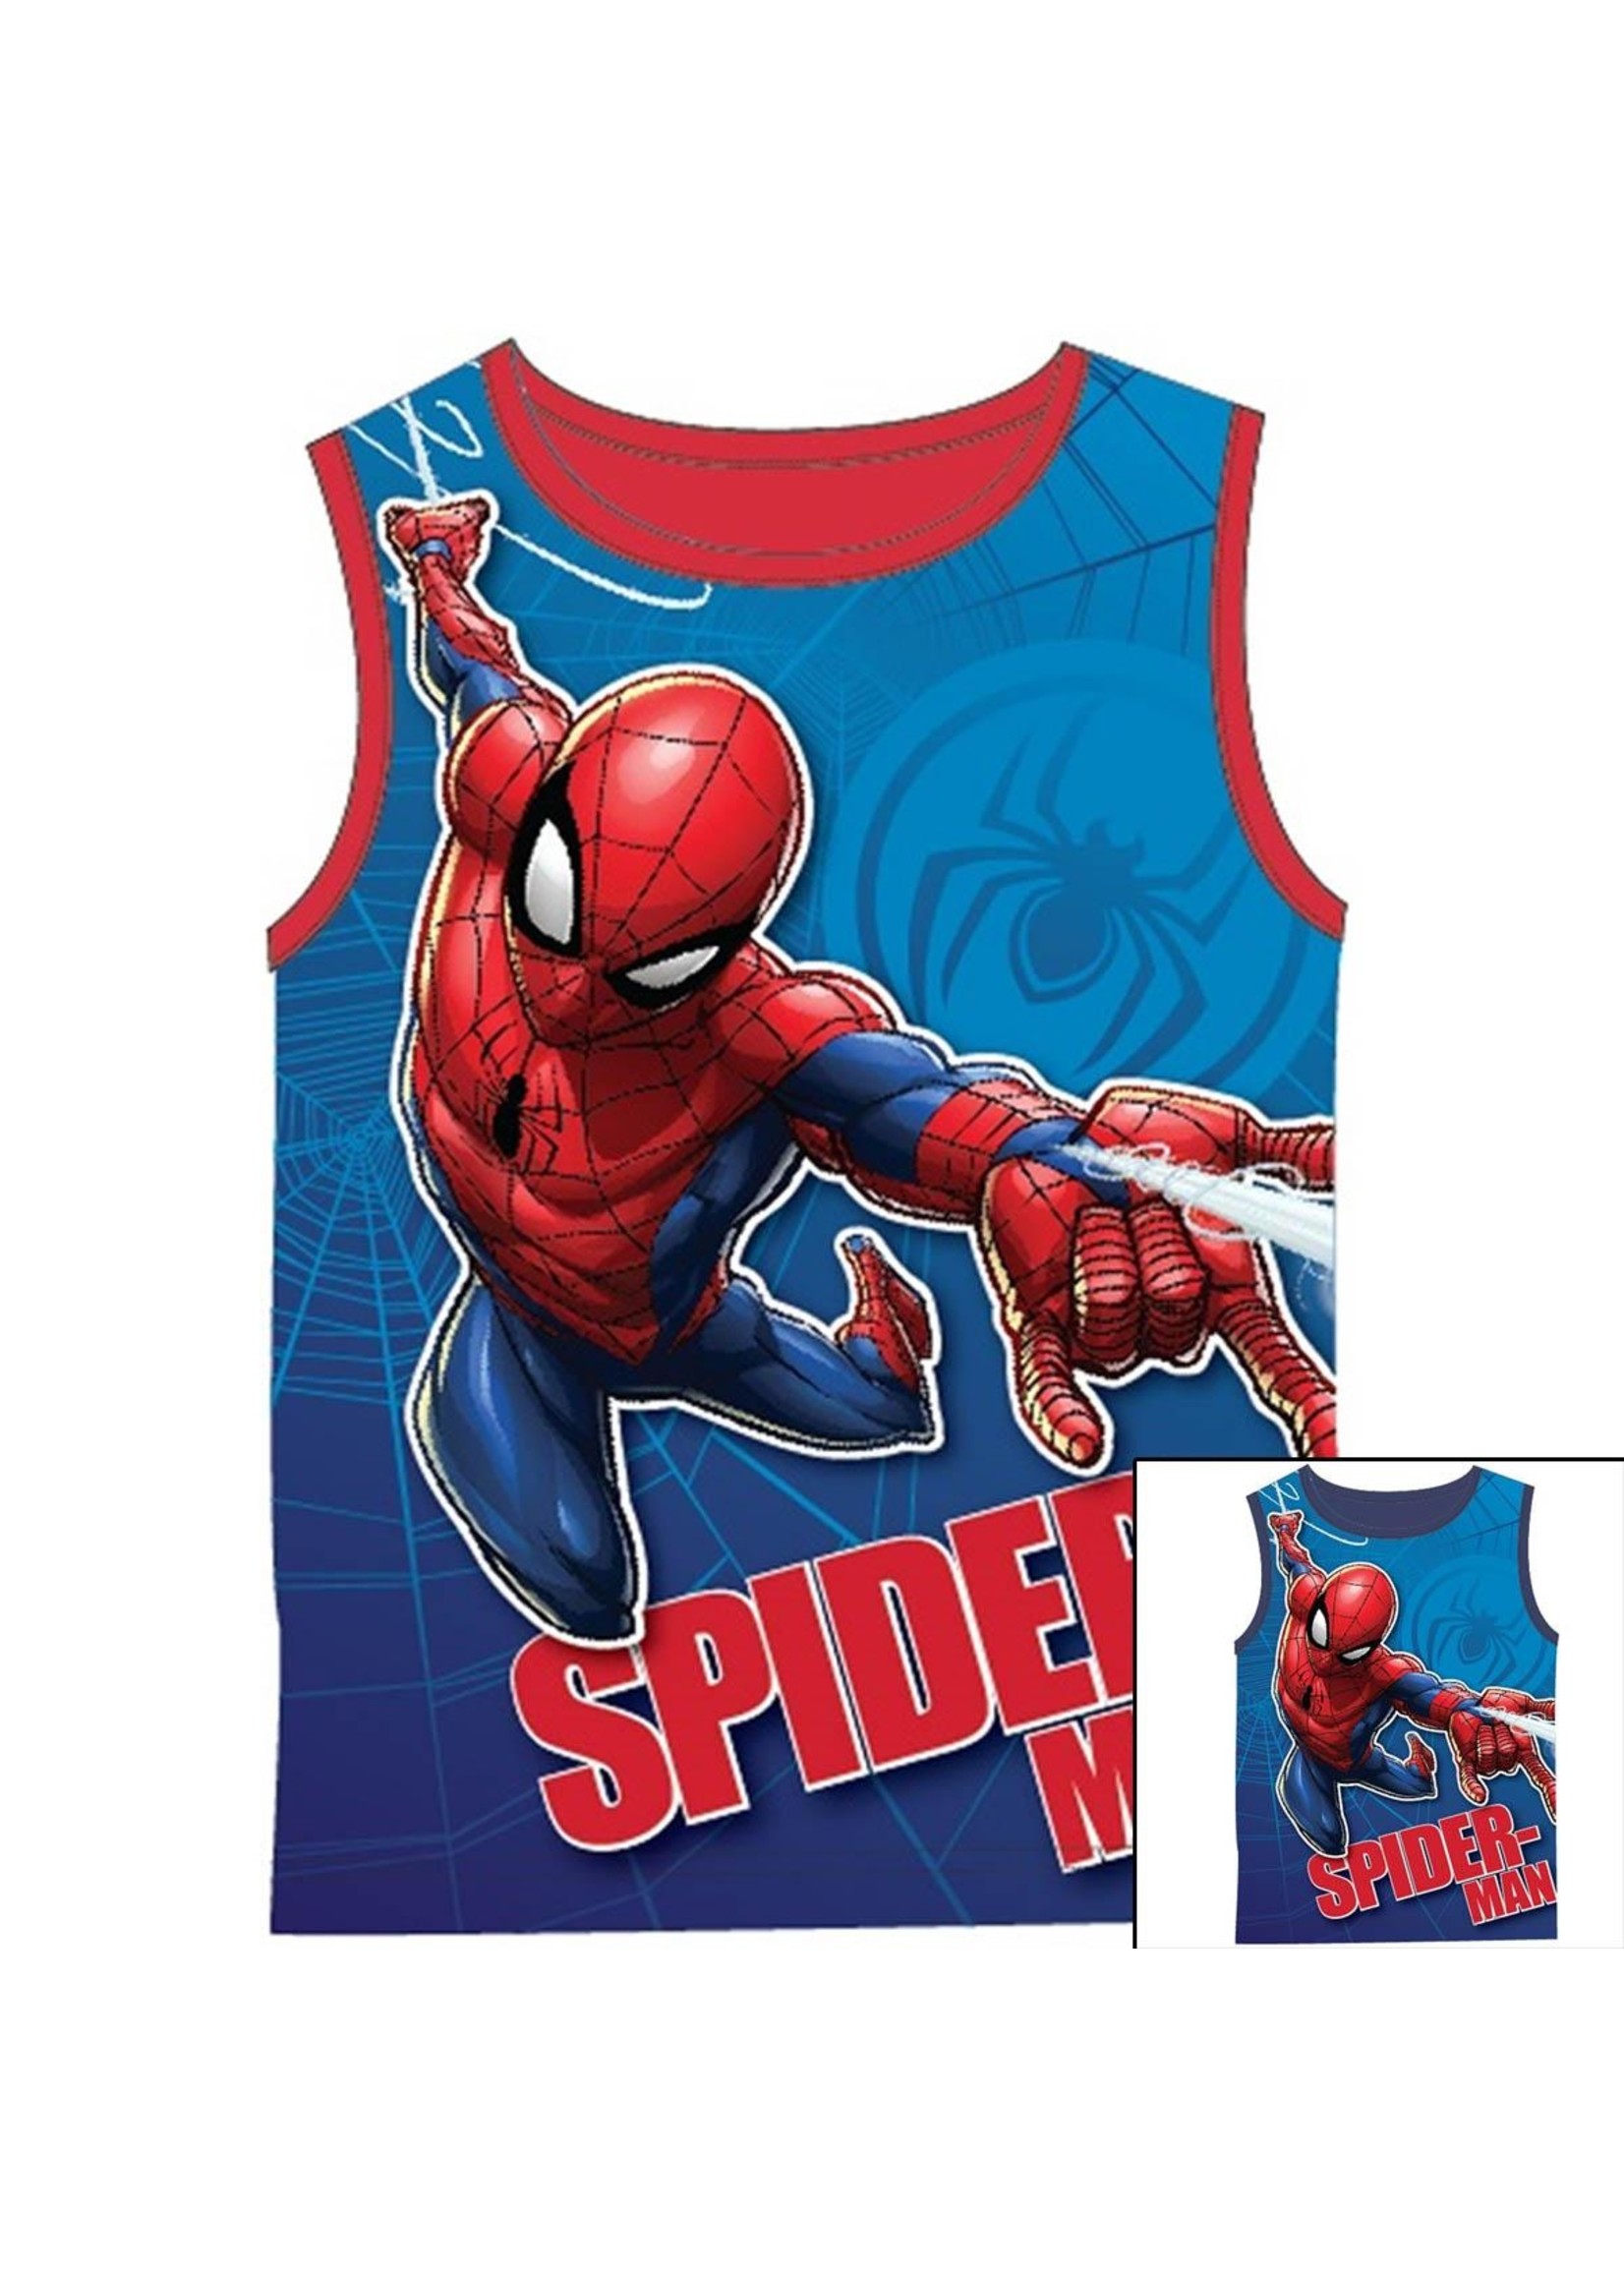 Marvel Spiderman mouwloos-shirt van Marvel blauw